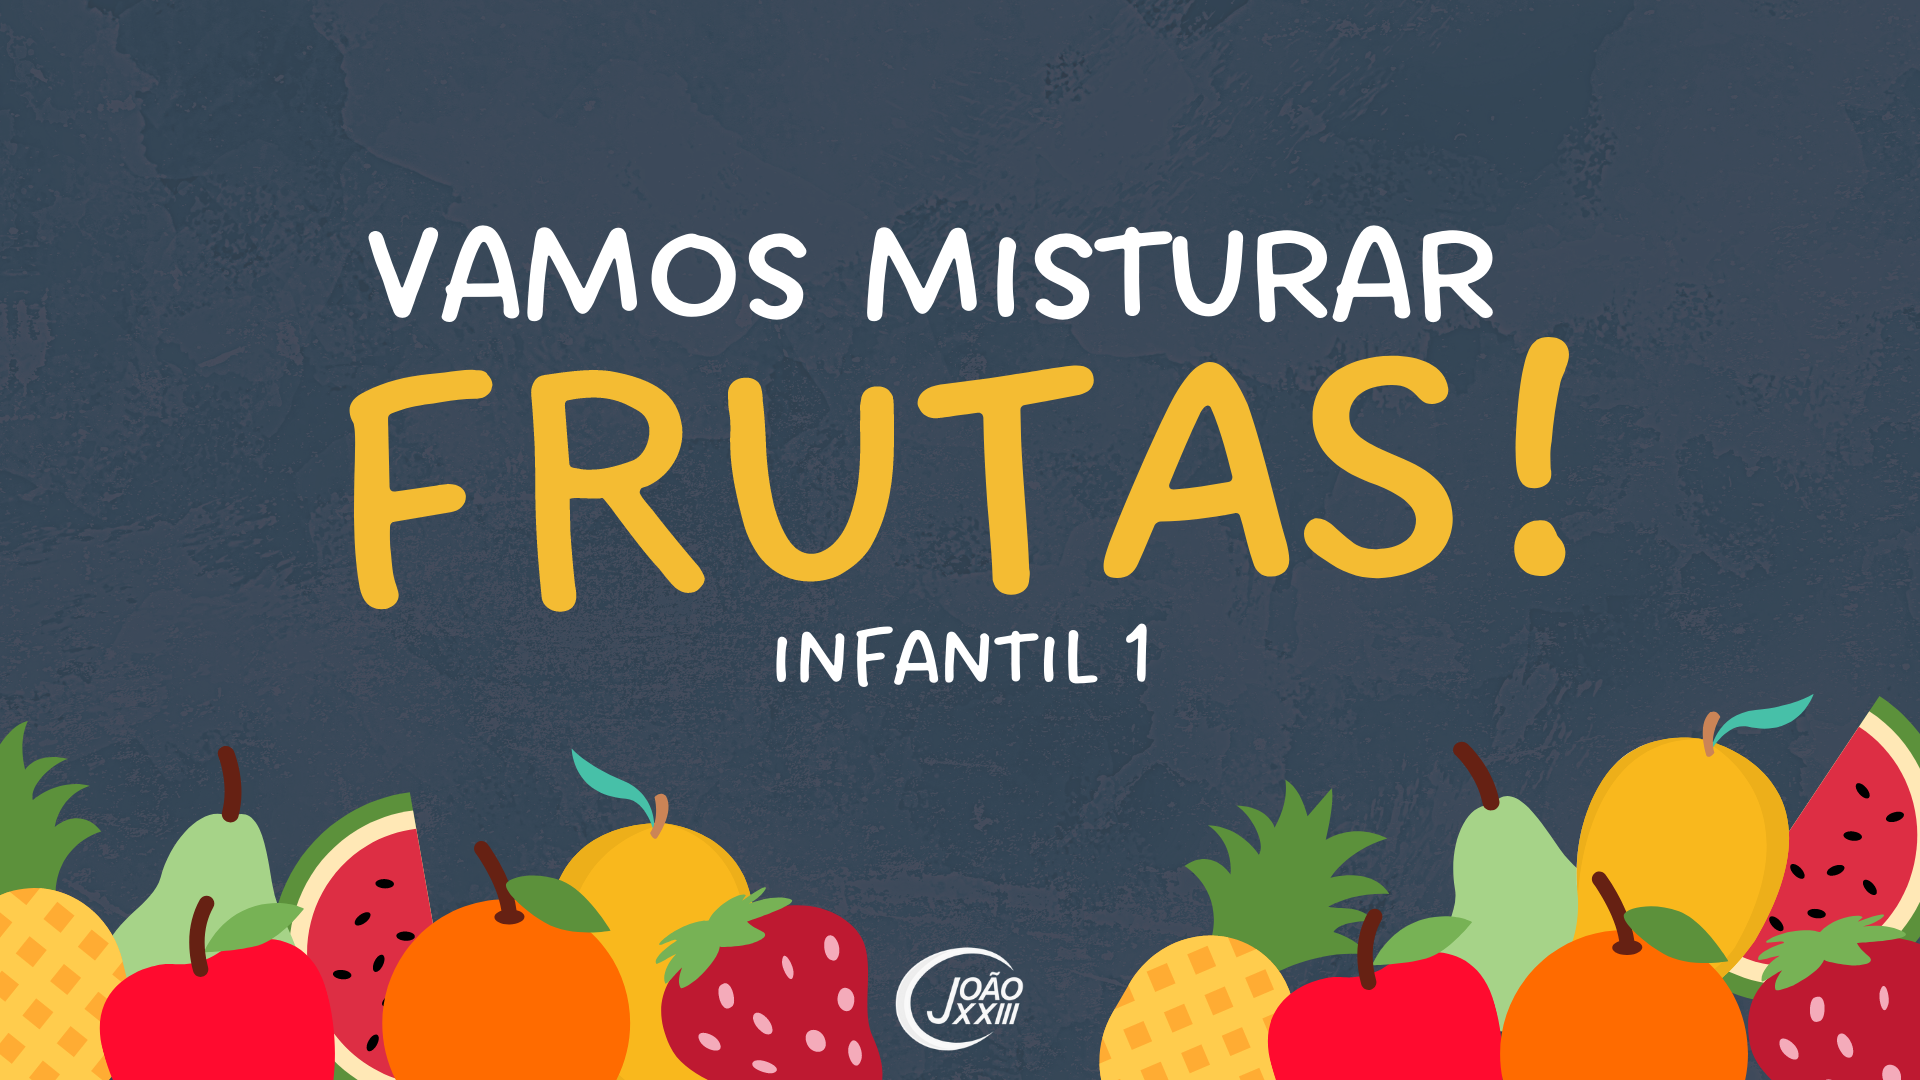 You are currently viewing Vamos misturar frutas!